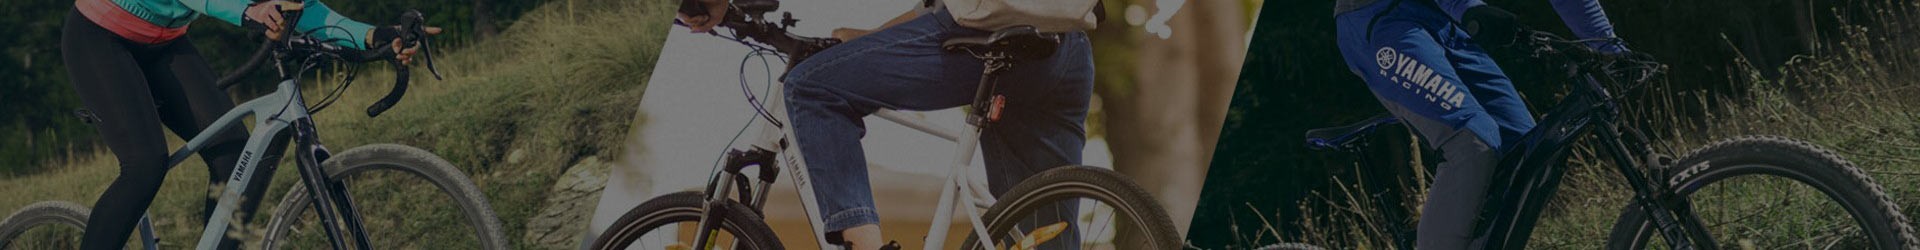 YAMAHA | Pantalon et Short vélo VTT | Gamme officielle constructeur